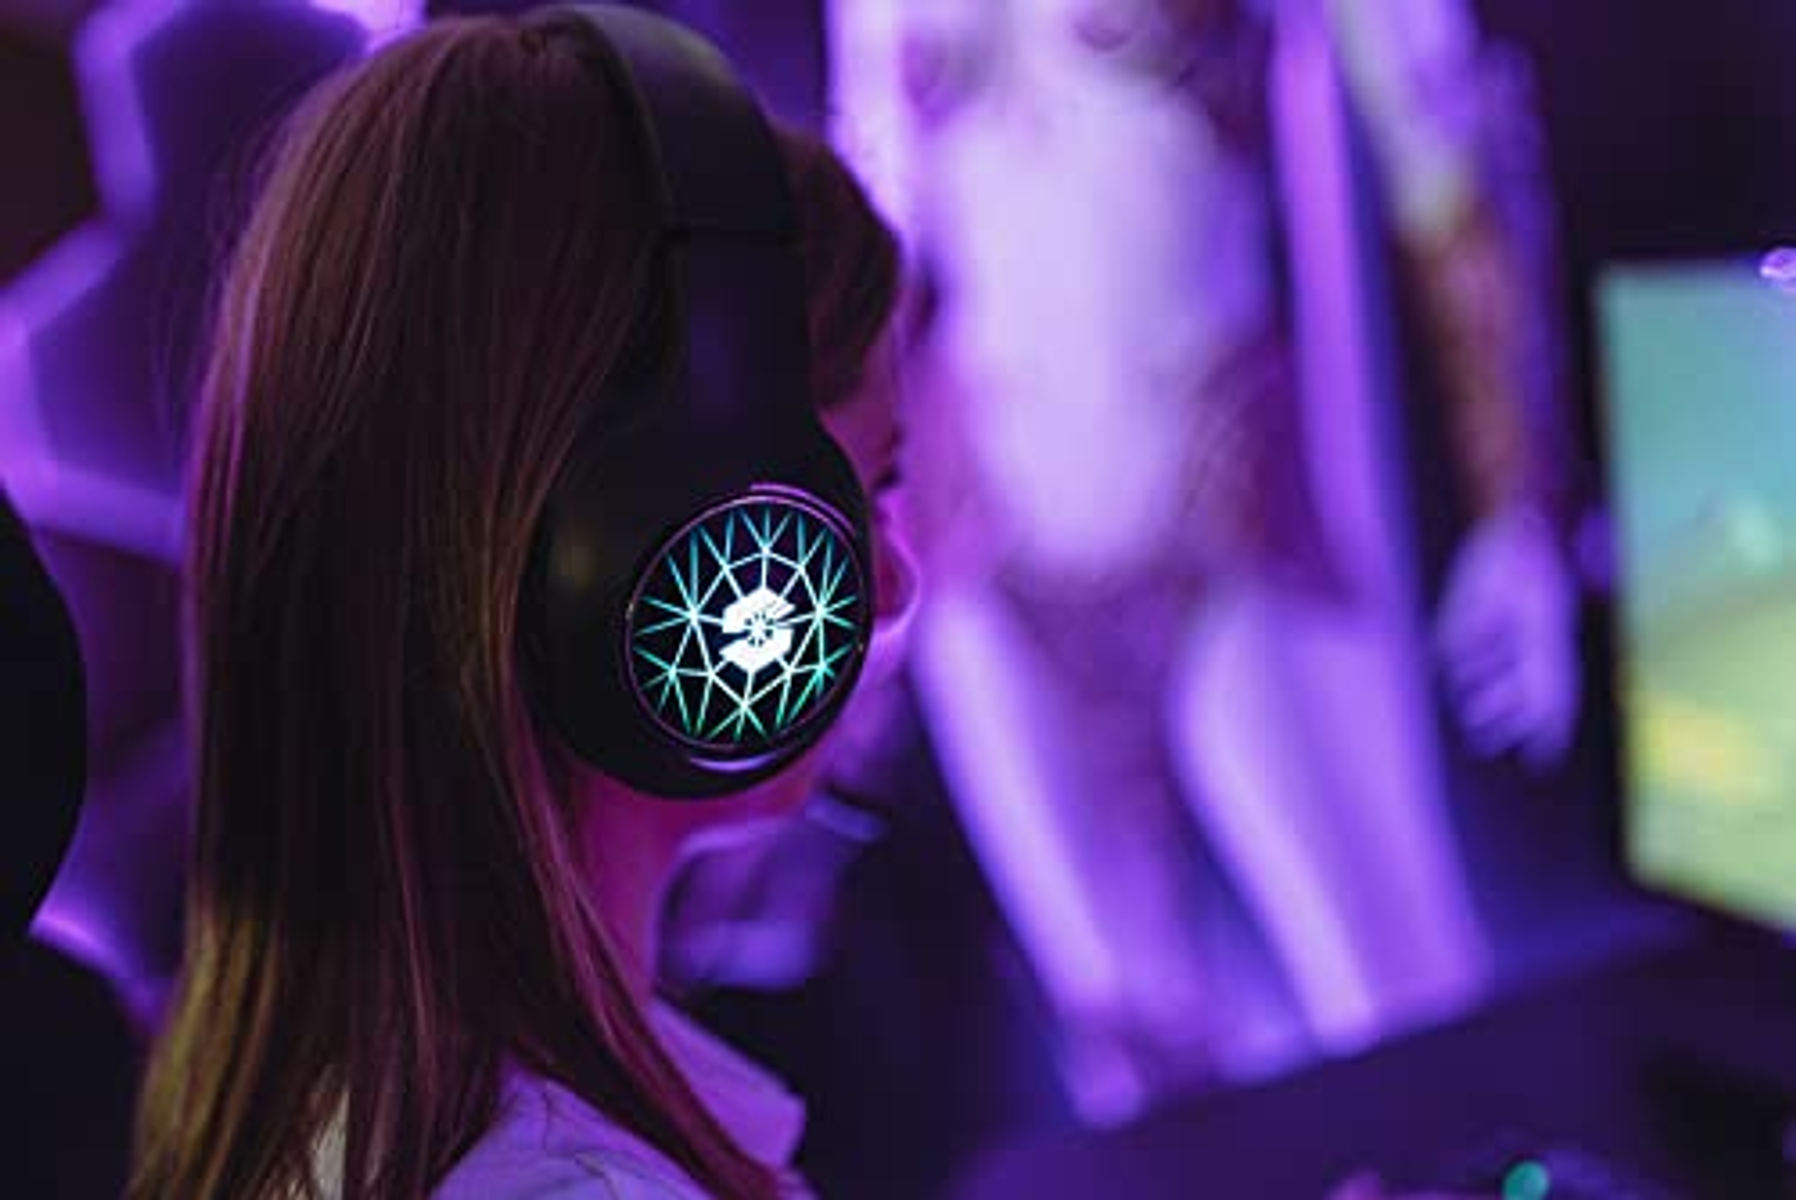 NK Illuminated 7.1, Over-ear Schwarz Headset Gaming